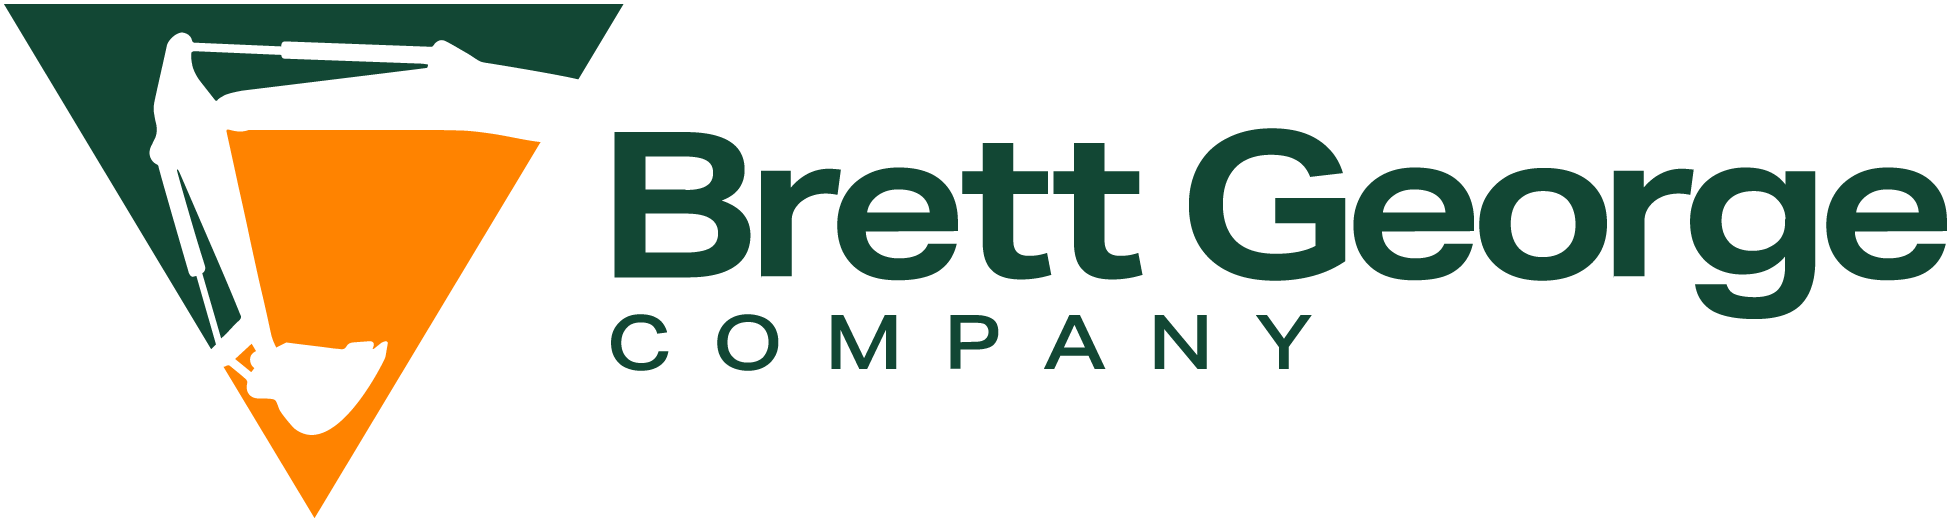 Brett George Construction Company